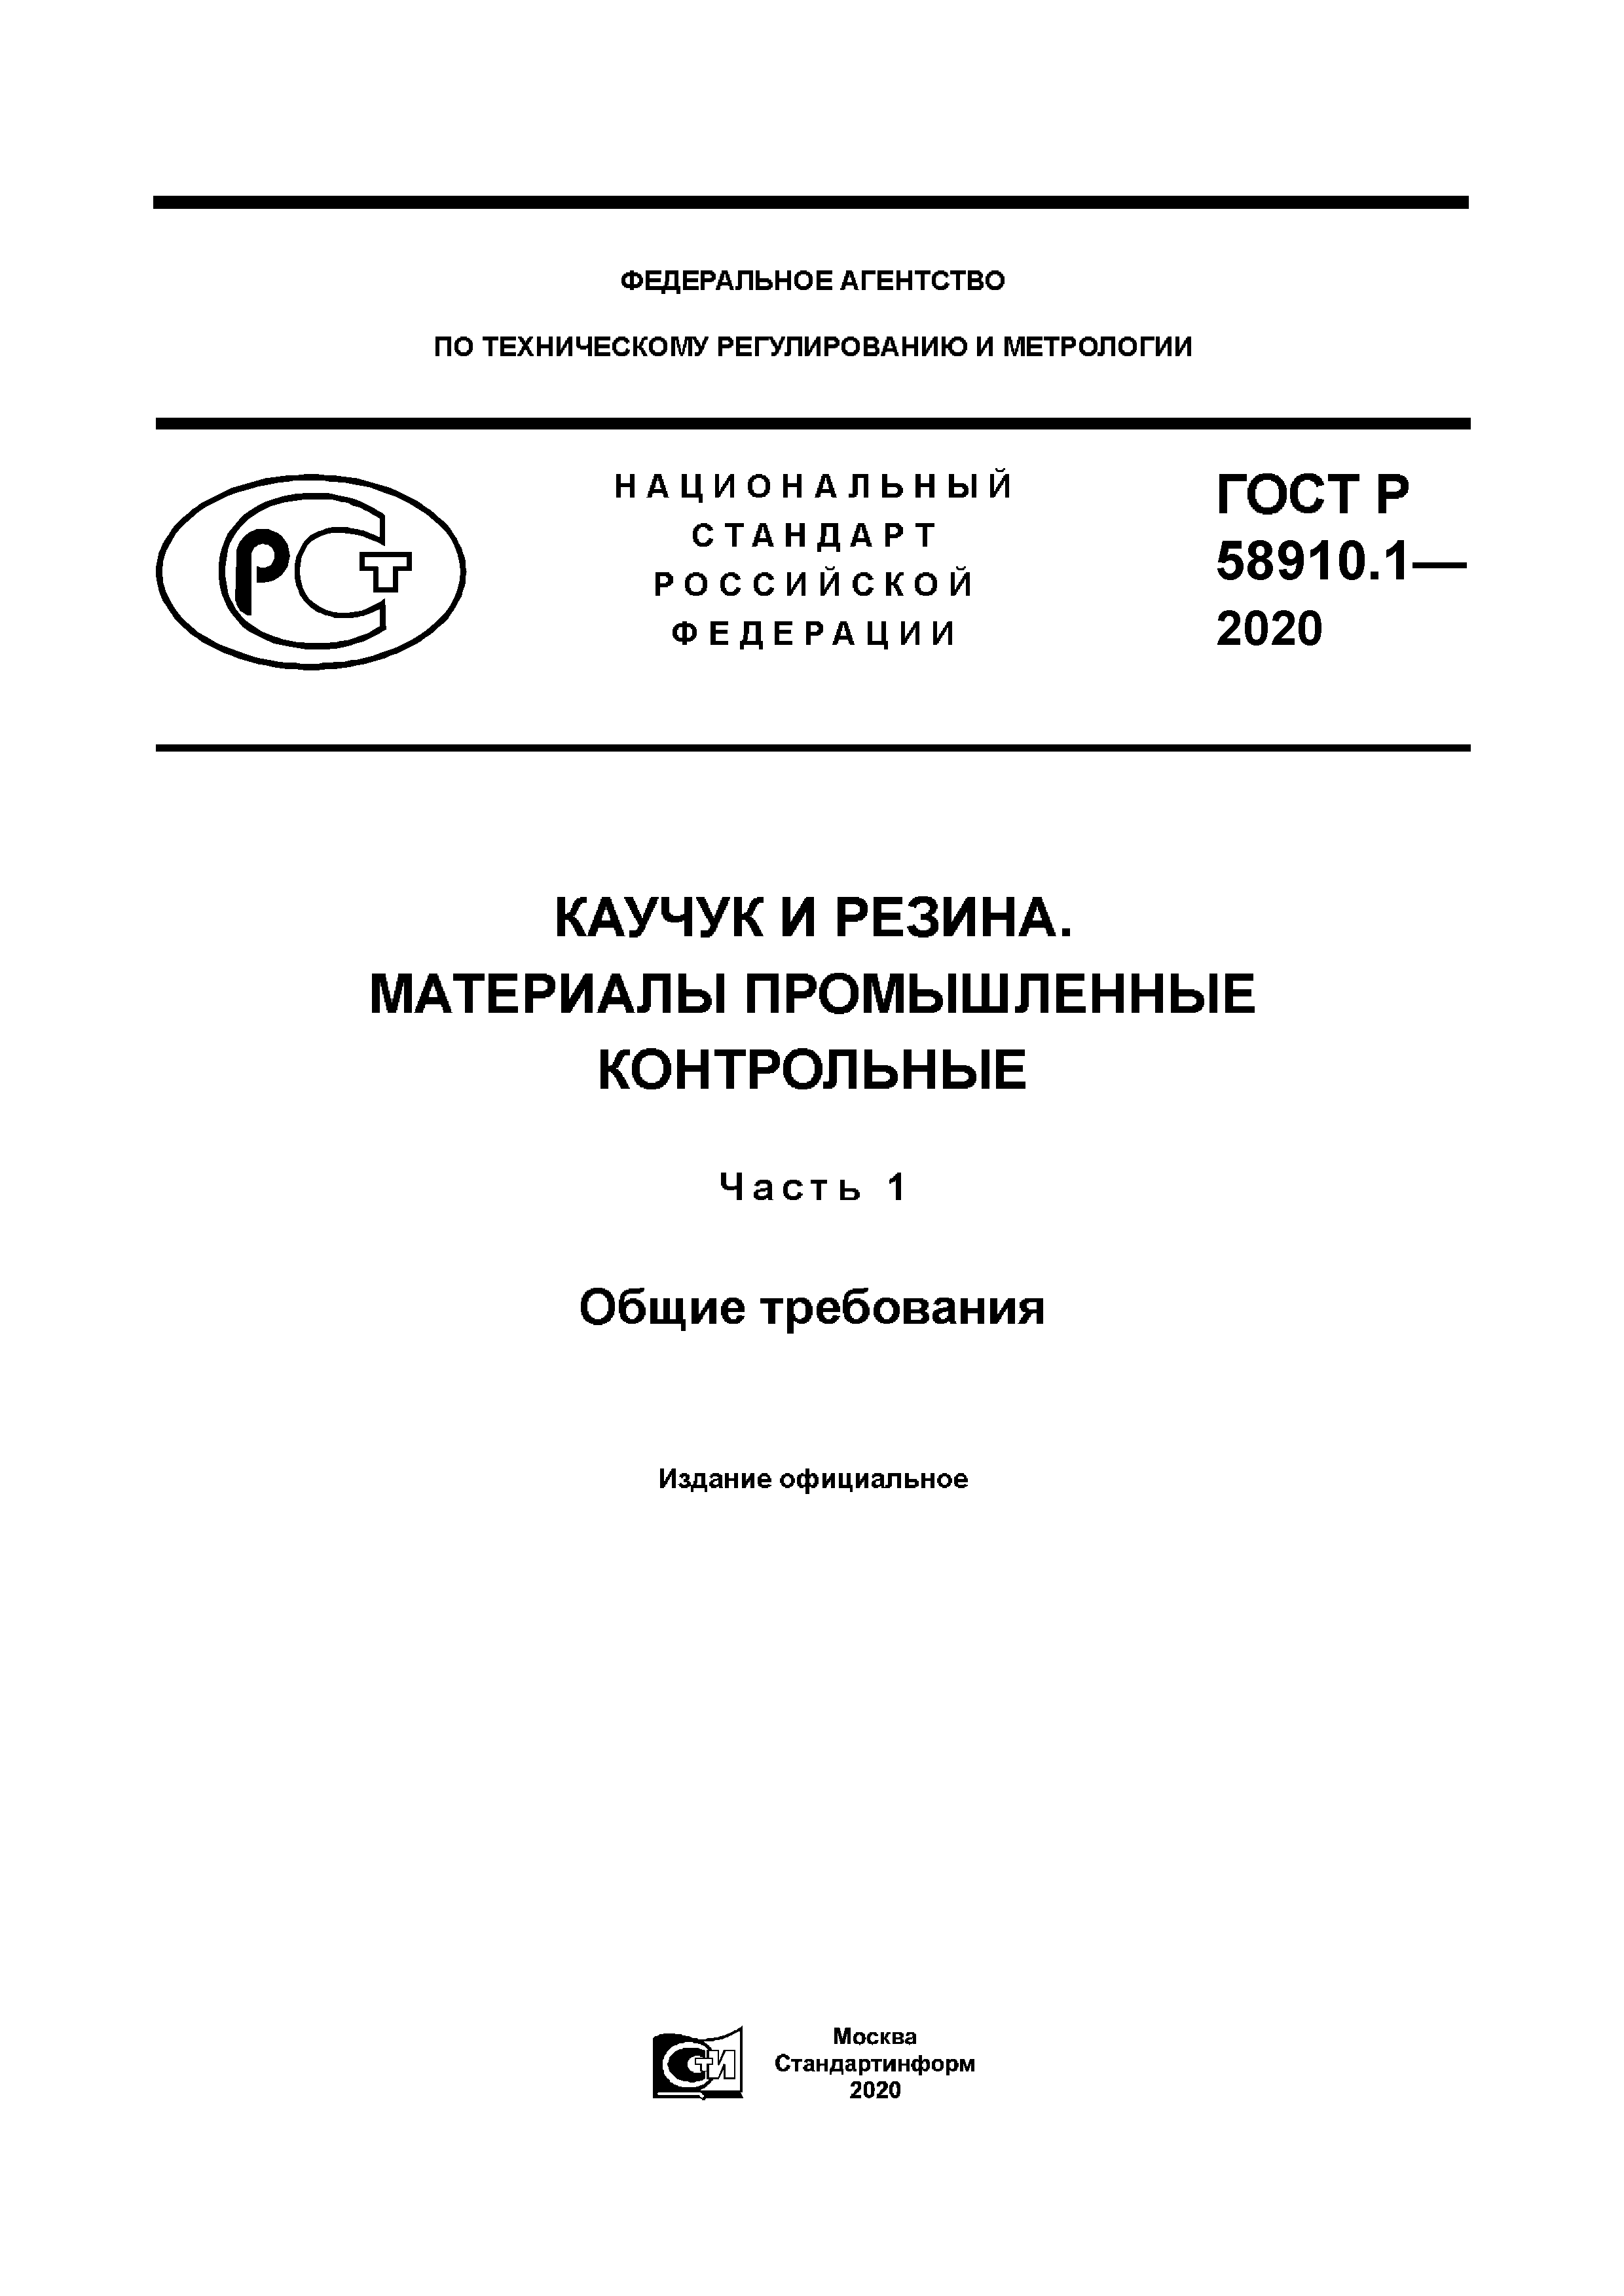 ГОСТ Р 58910.1-2020